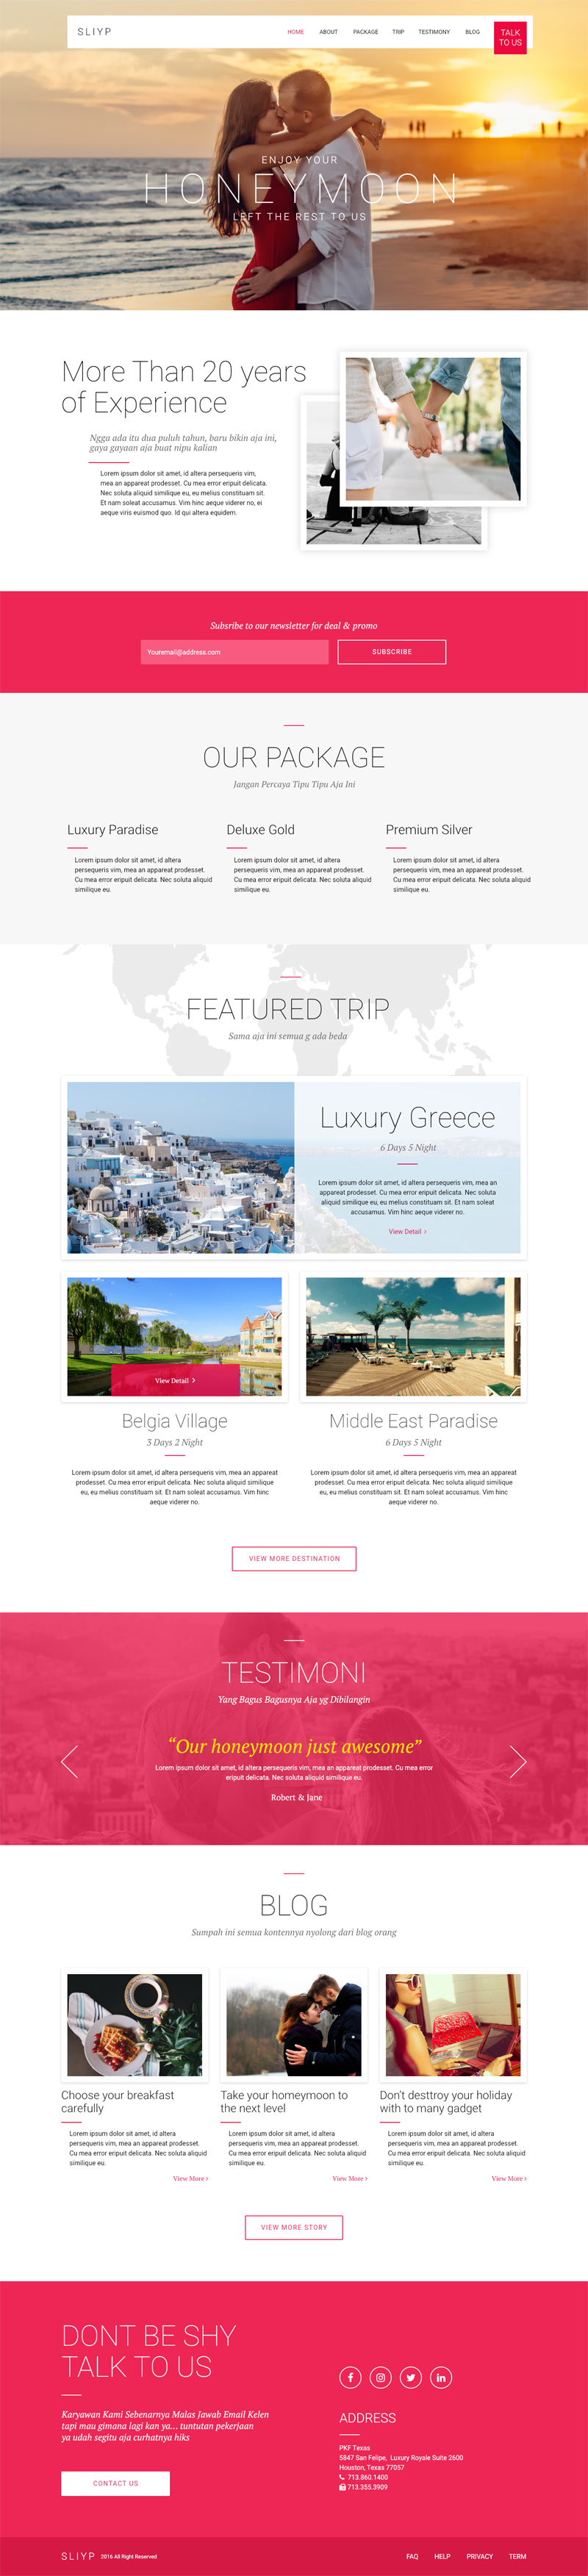 SLIYP Travel Agency Landing Page mit Adobe XD gemacht